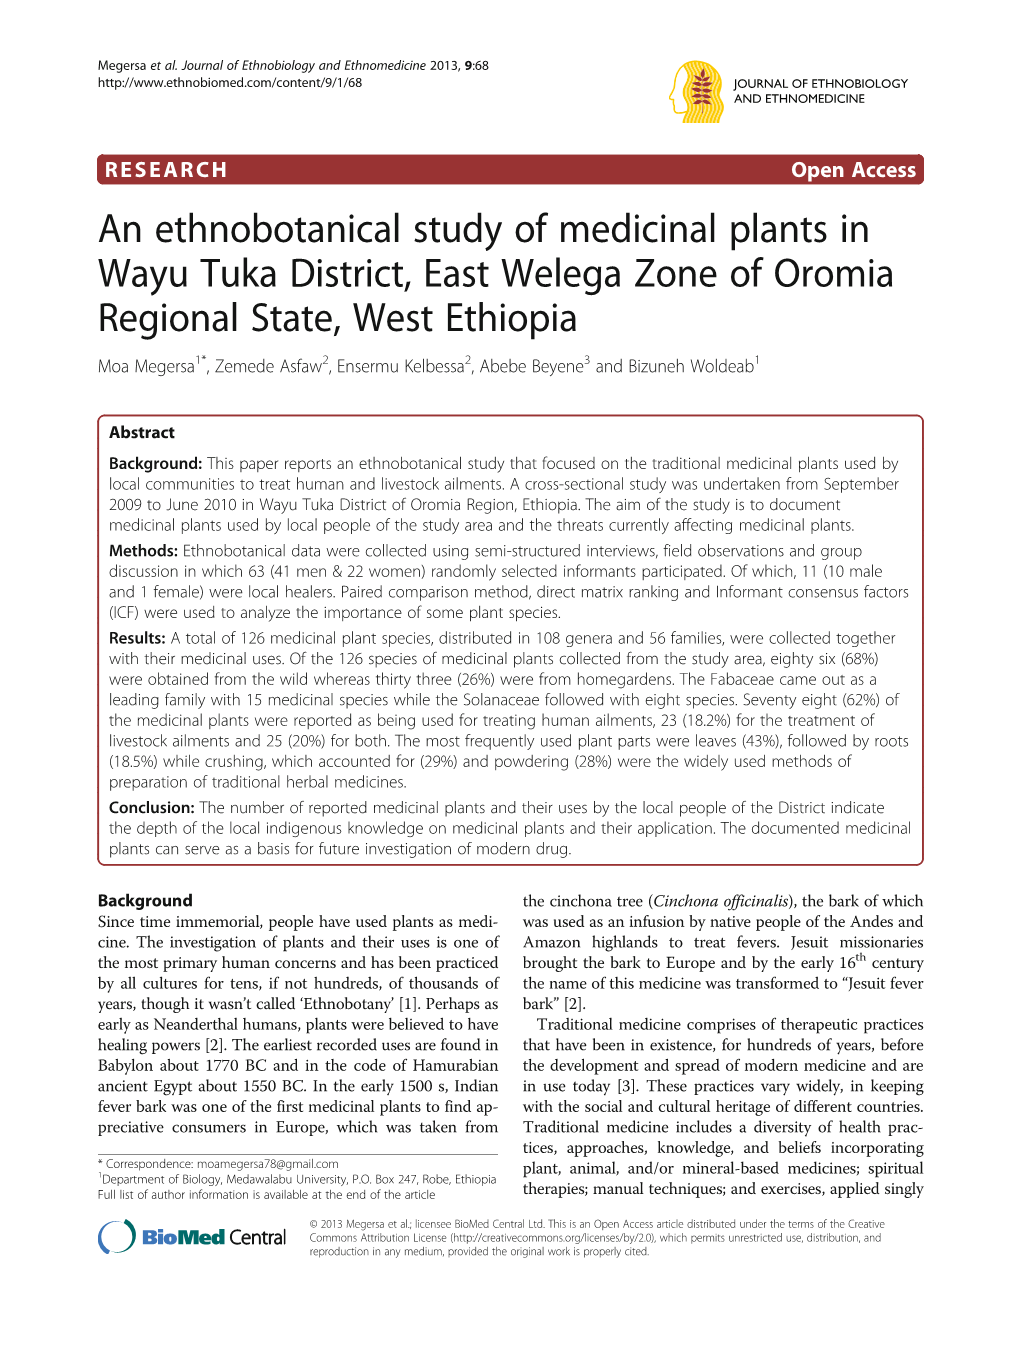 An Ethnobotanical Study of Medicinal Plants in Wayu Tuka District, East